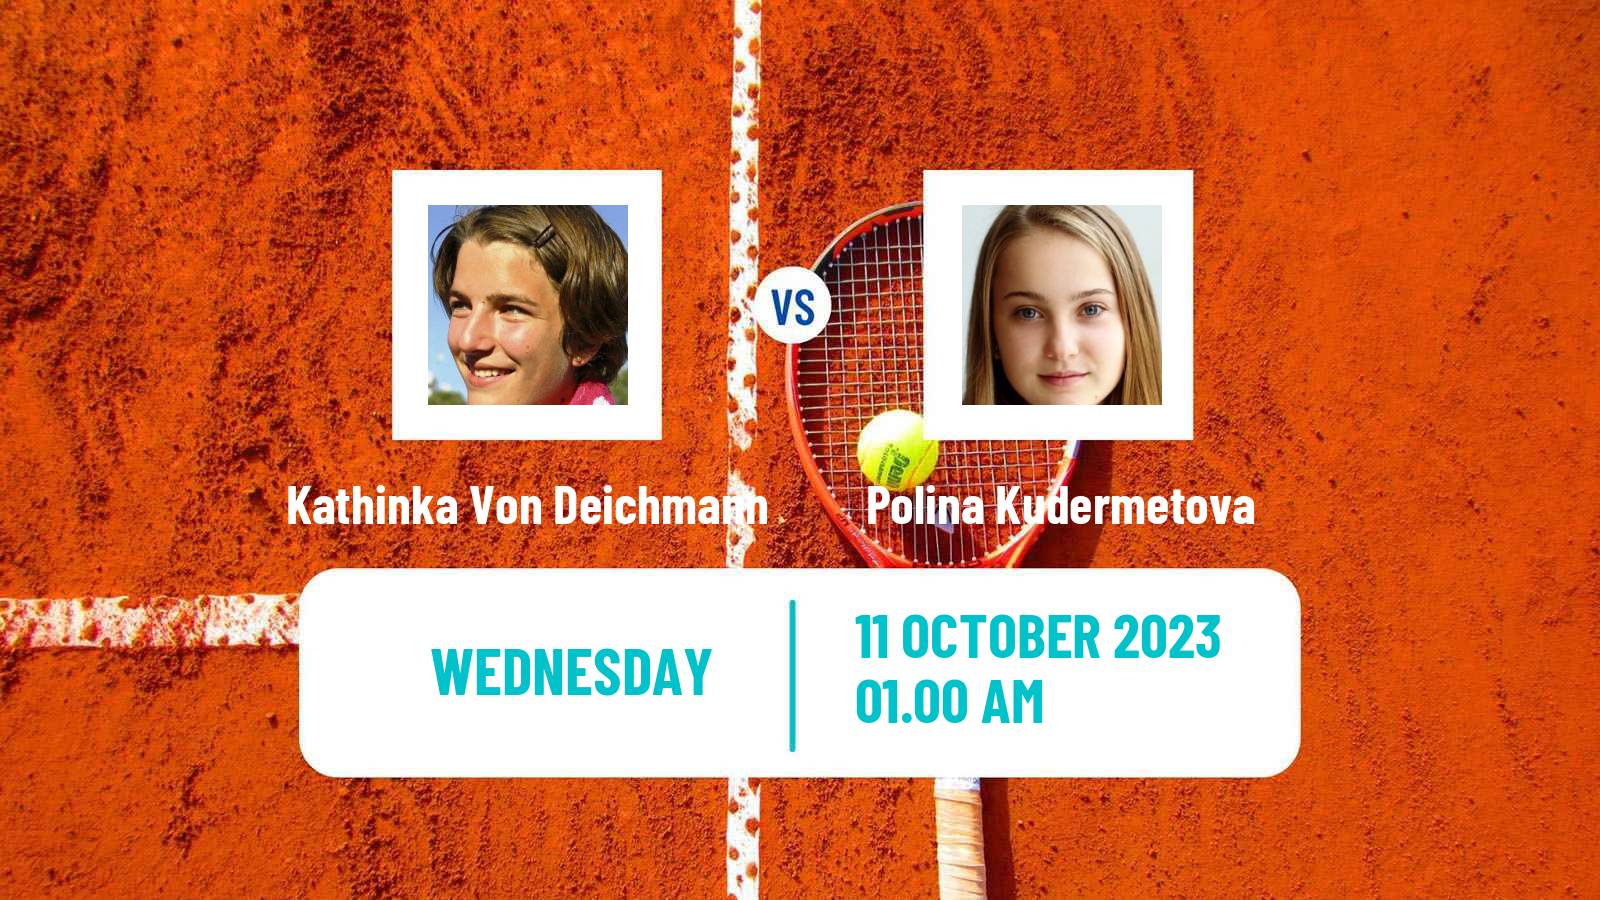 Tennis WTA Seoul Kathinka Von Deichmann - Polina Kudermetova